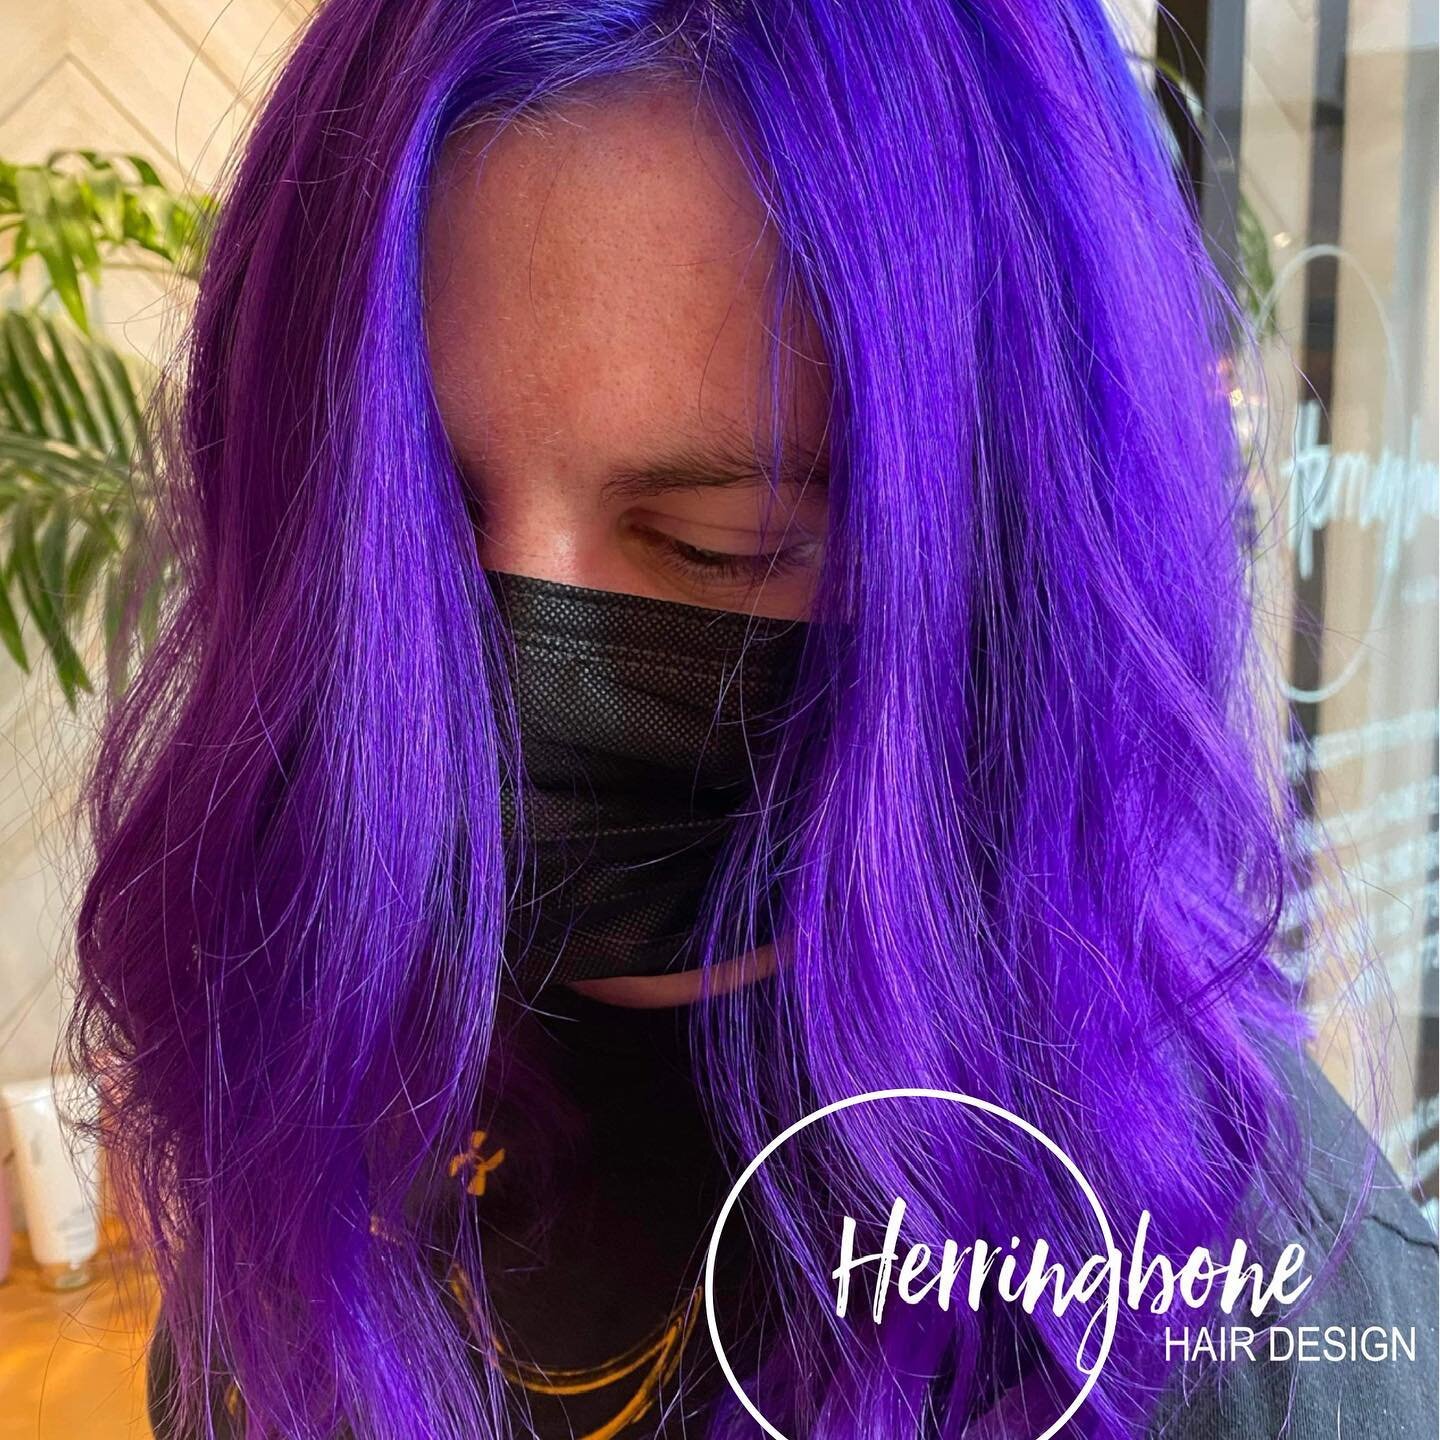 Did somebody say Purple rain ☔️ #purple #purplehairdontcare #funhaircolor #alfaparfpeople #sustainablesalon #🤩 hair by @kcshairstylist